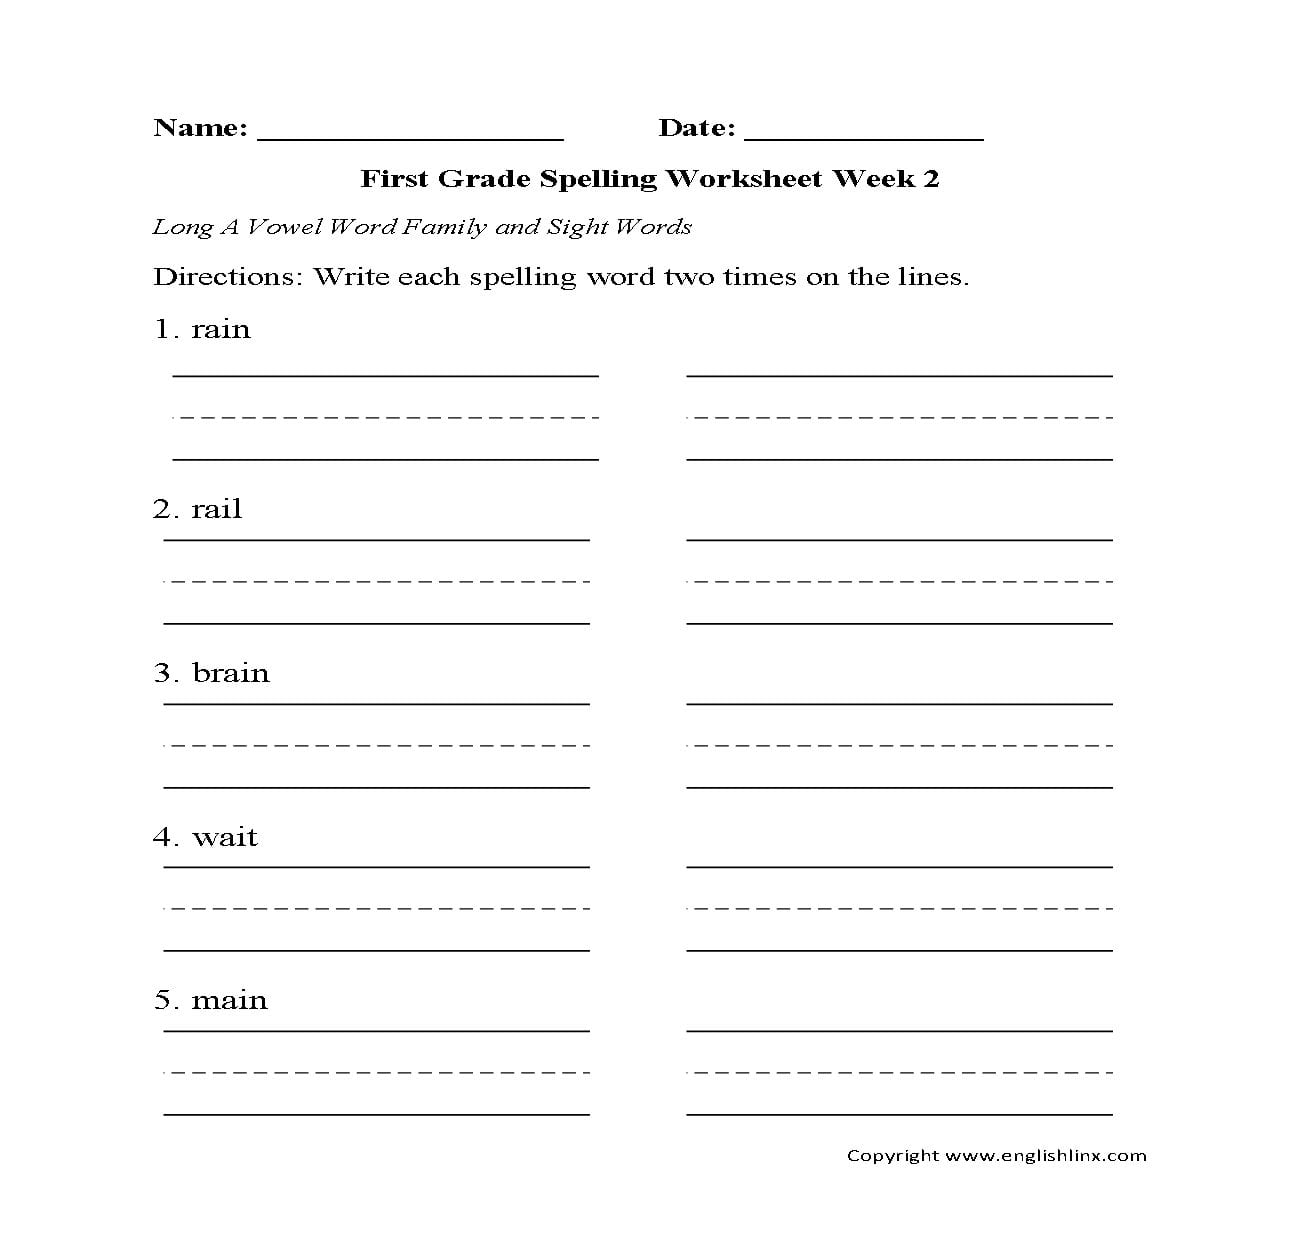 Spelling Worksheets  First Grade Spelling Worksheets For Spelling Worksheets For Grade 5